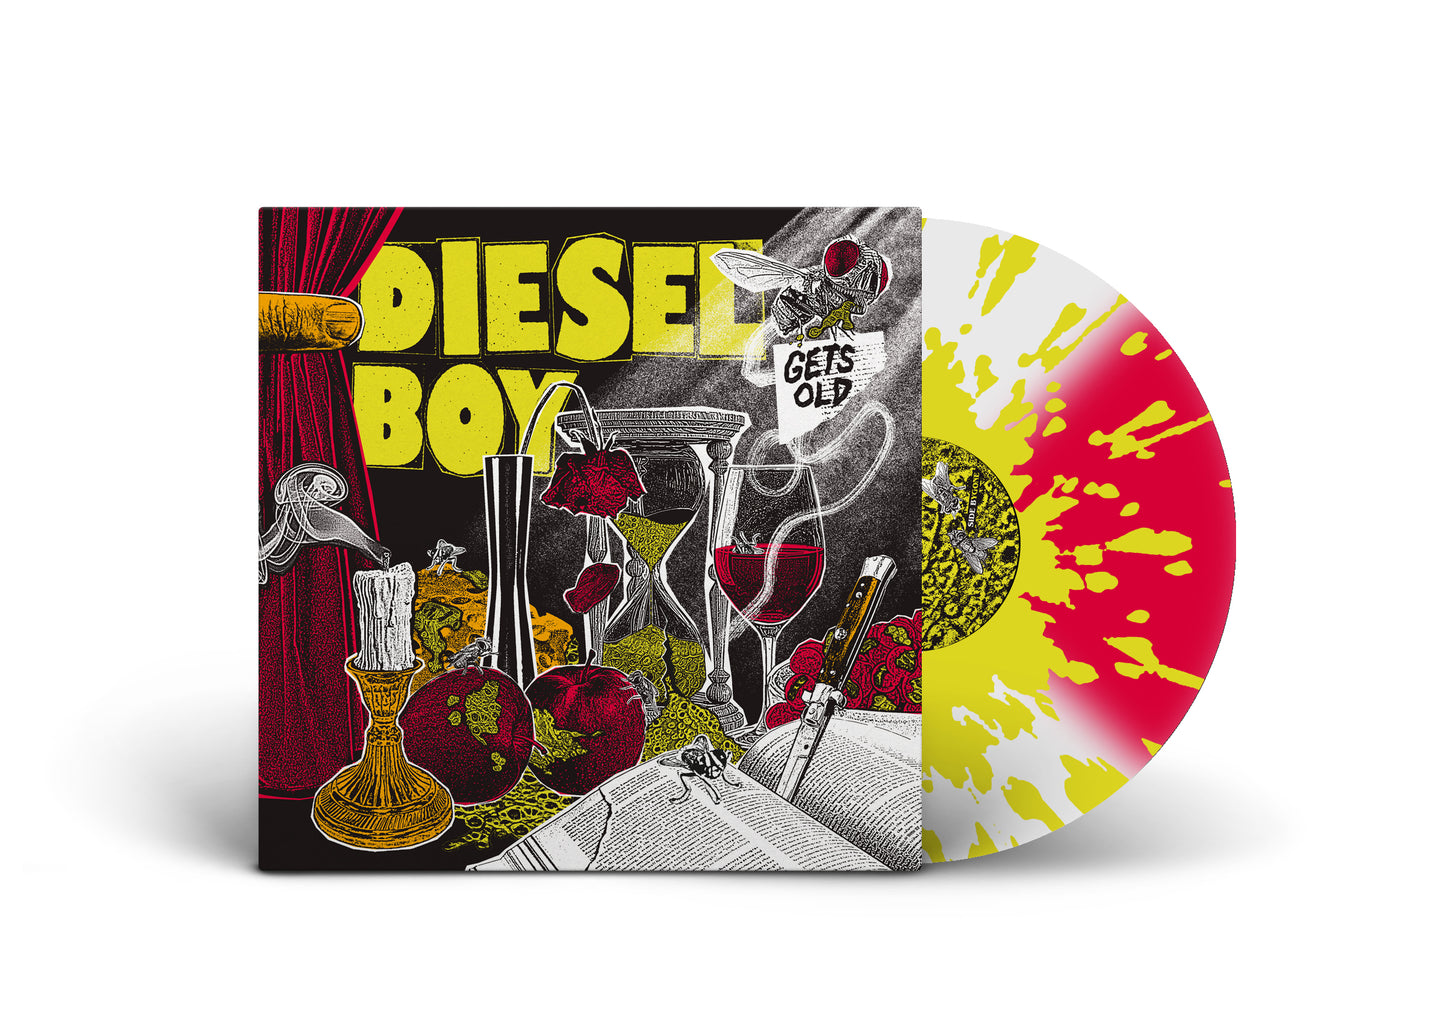 DIESEL BOY - "Gets Old" (SBAM) (CD/LP)